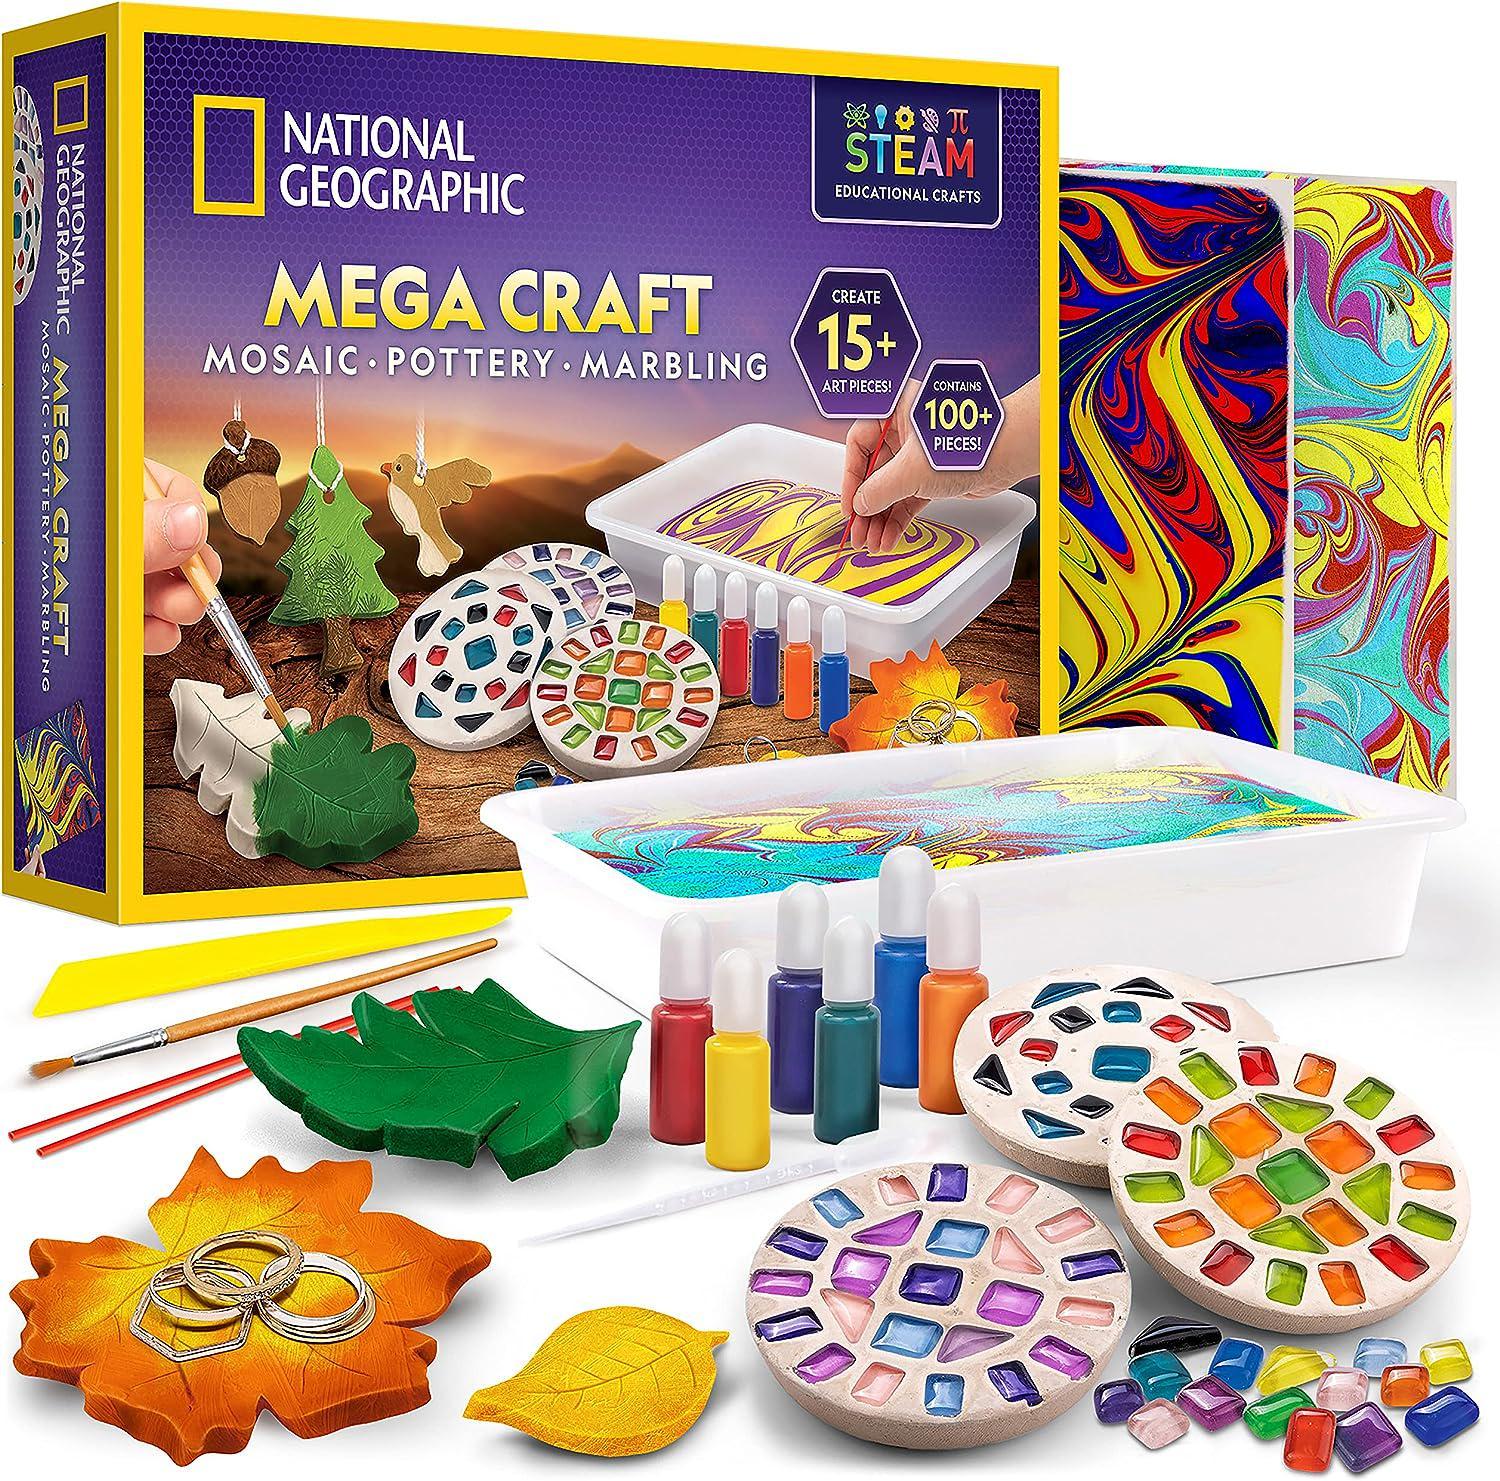 Crayola Suncatchers, Kid's Paint Craft Kits Age 4+, Pick your Design! US  SELLER!